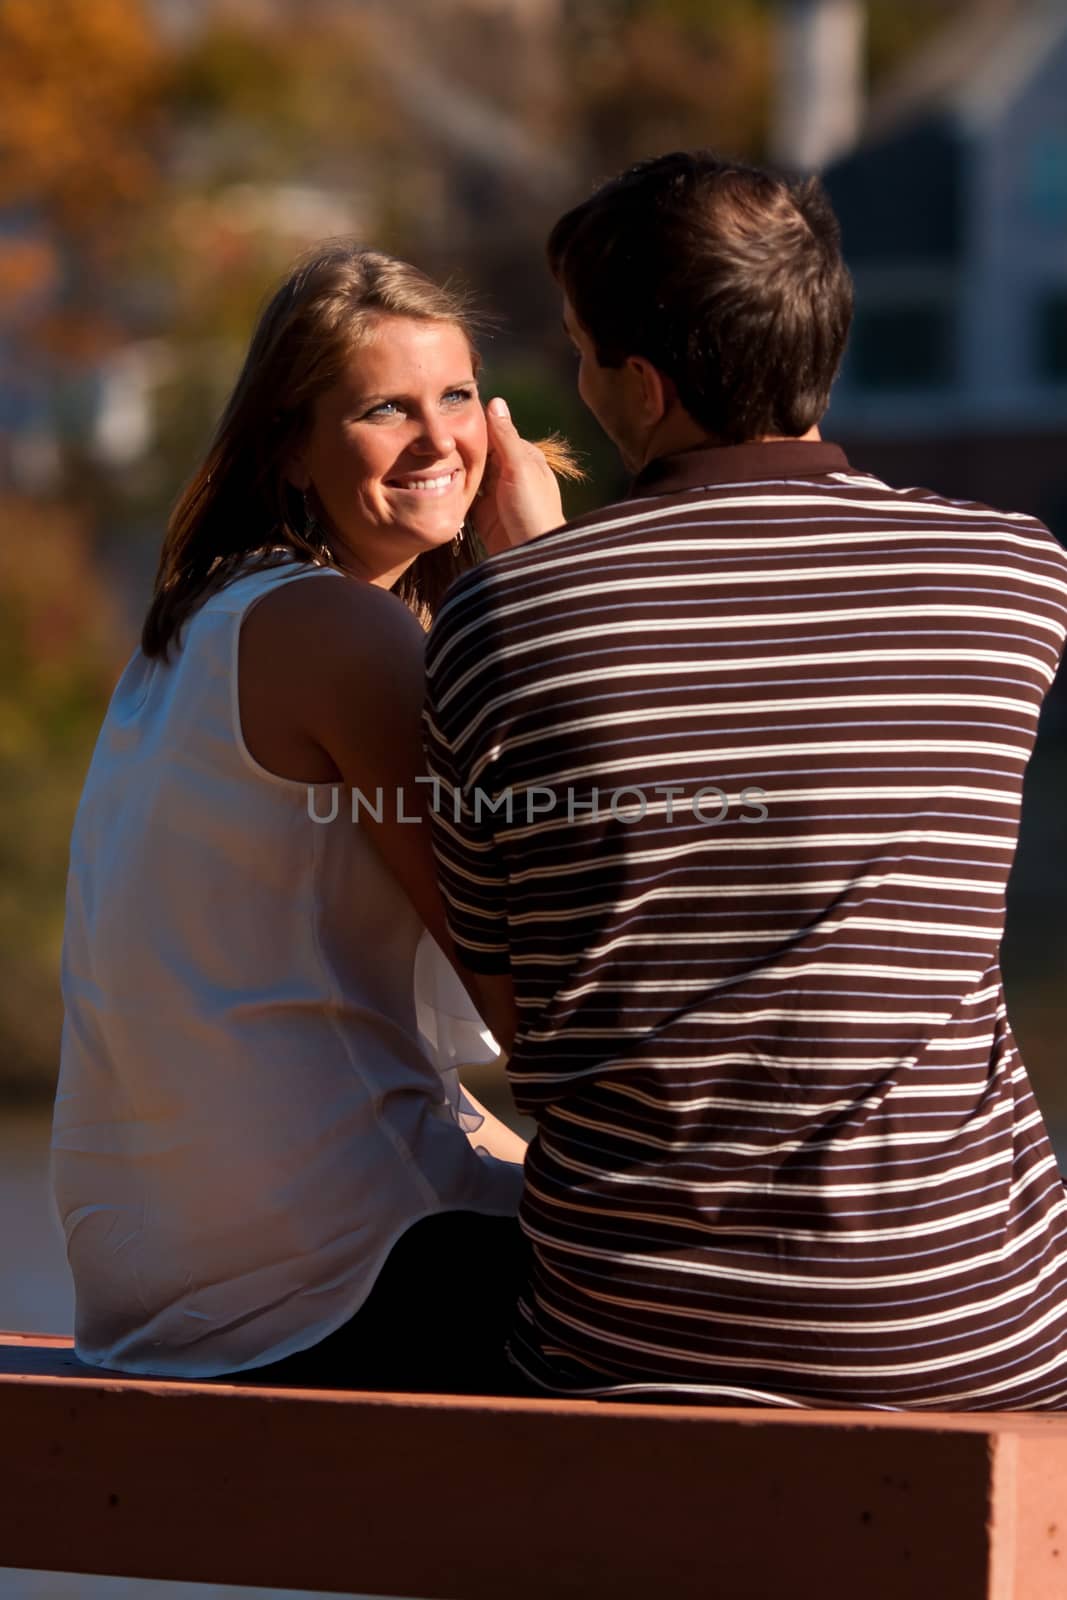 Man Caresses Sunlit Face Of Girlfriend Sitting On Bench by BluIz60